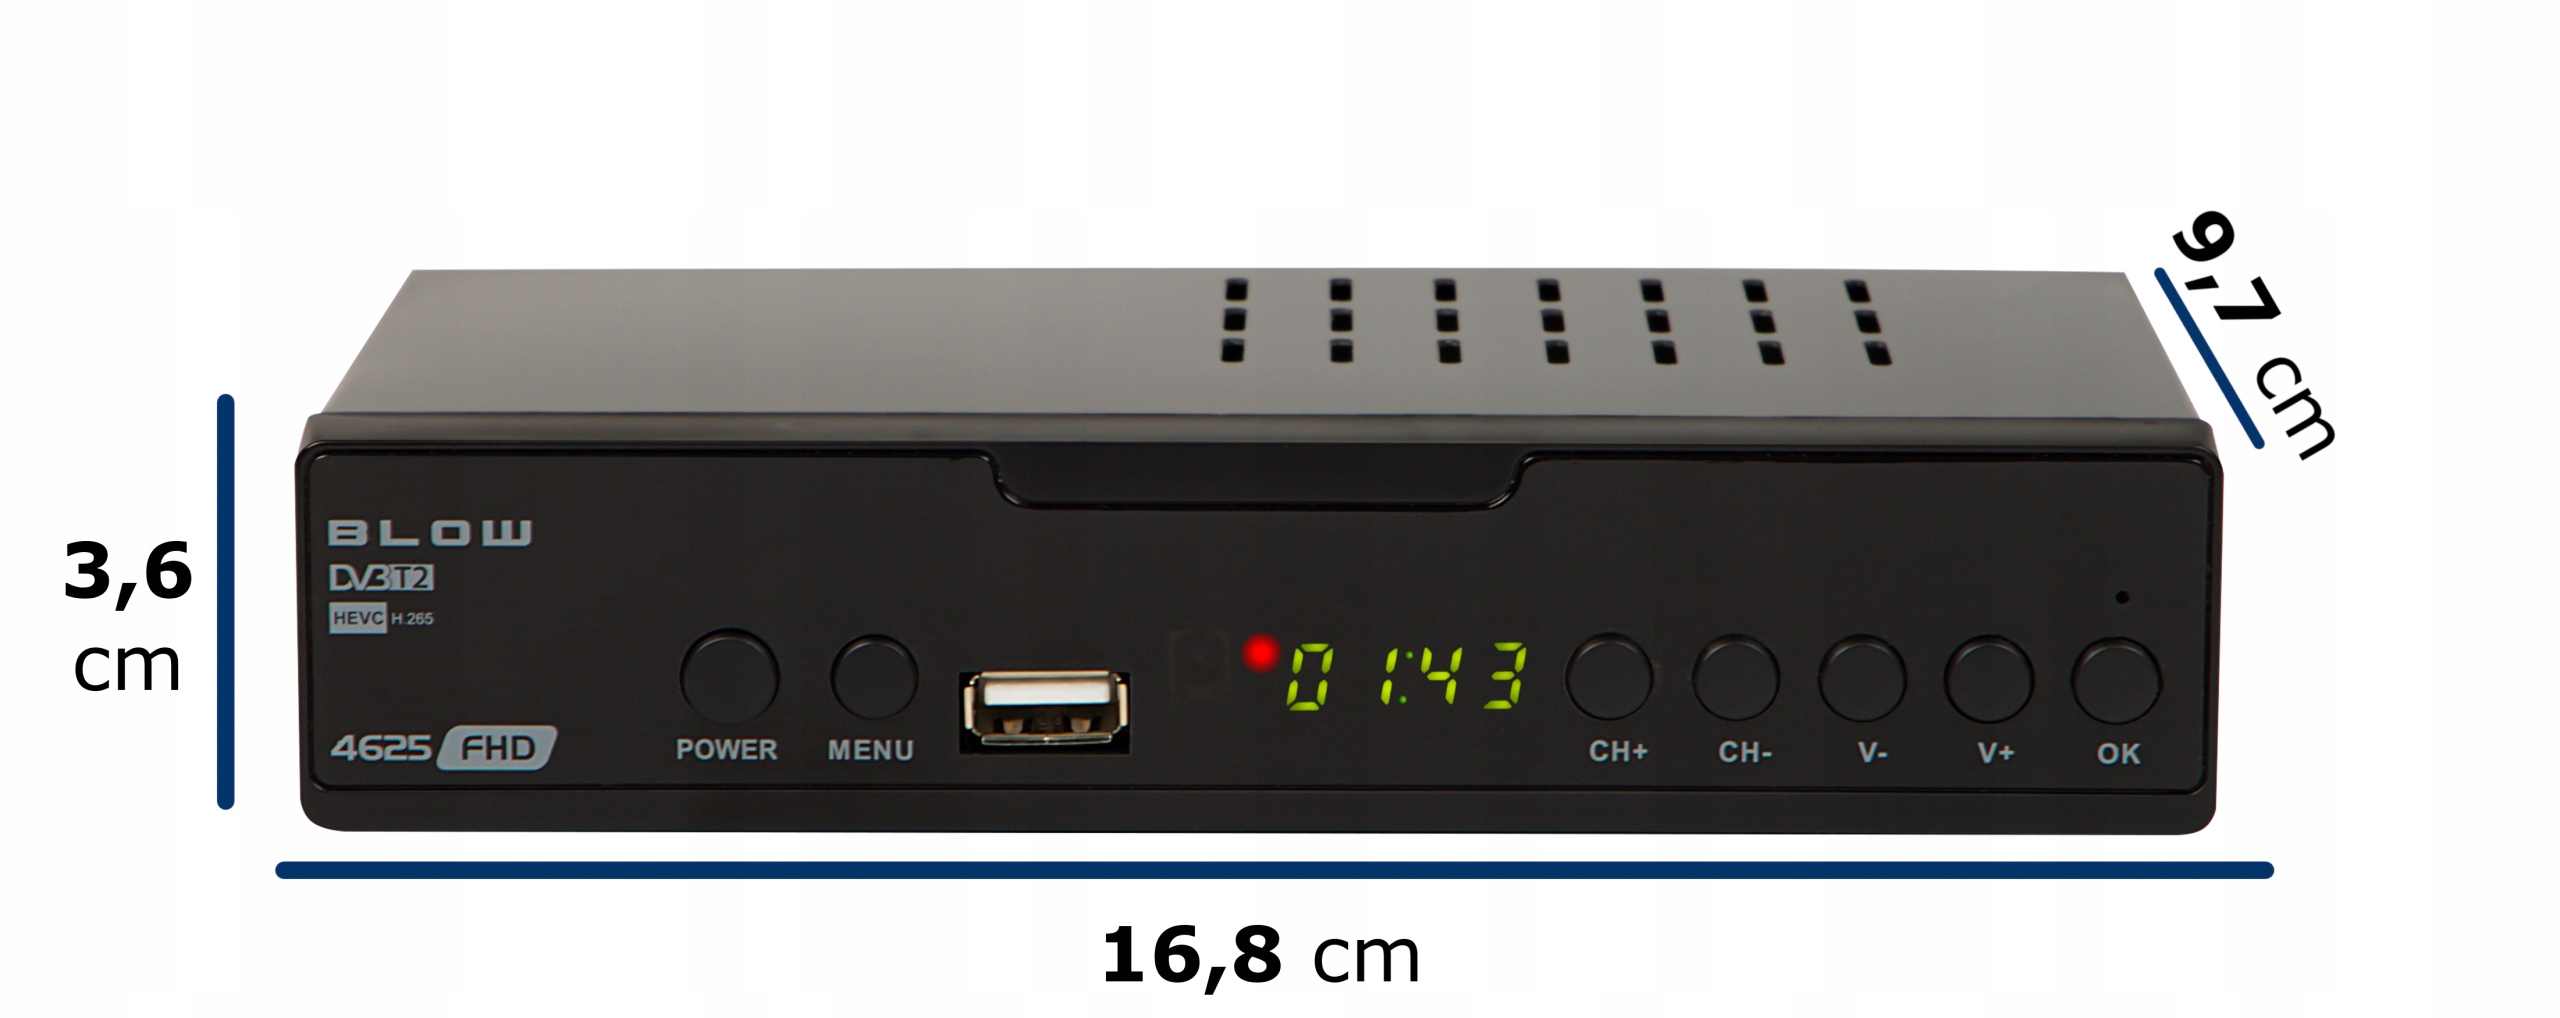 TUNER DEKODER DVB-T2 TV NAZIEMNEJ H.265 HEVC FULL HD USB HDMI PILOT BATERIE Rodzaj tunera DVB-T2